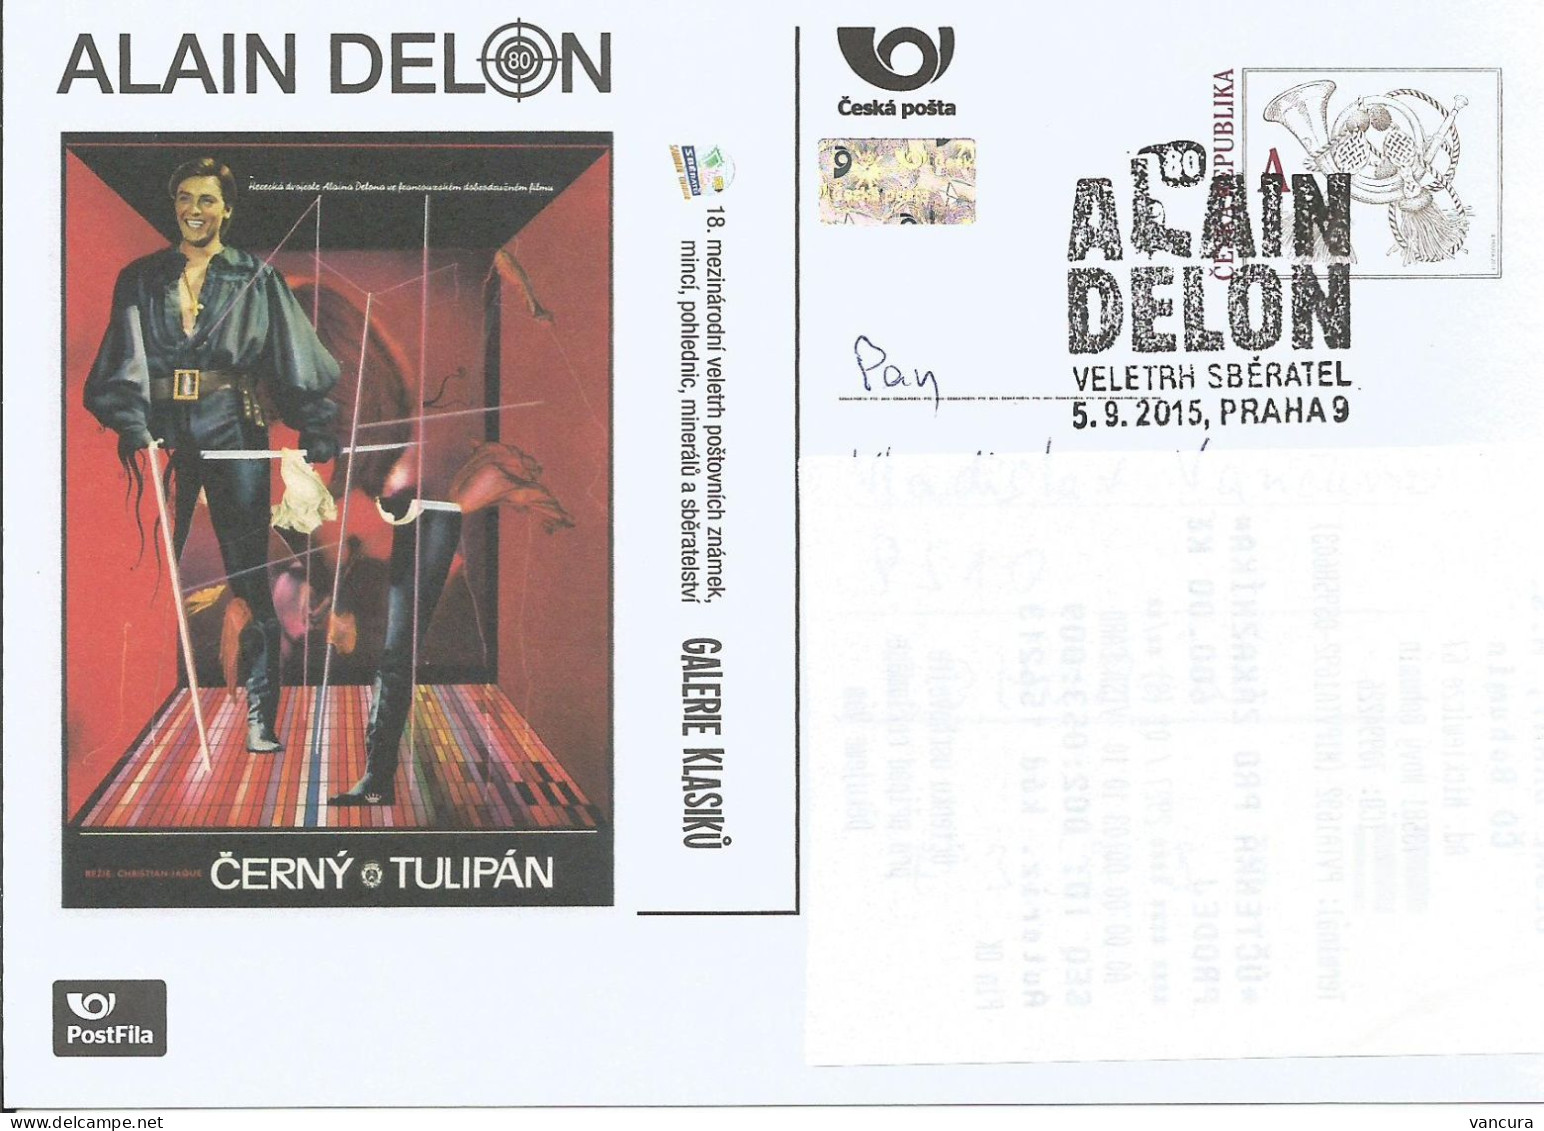 Postfila Card Czech Republic Sberatel Prague 2015 Alain Delon - Postales